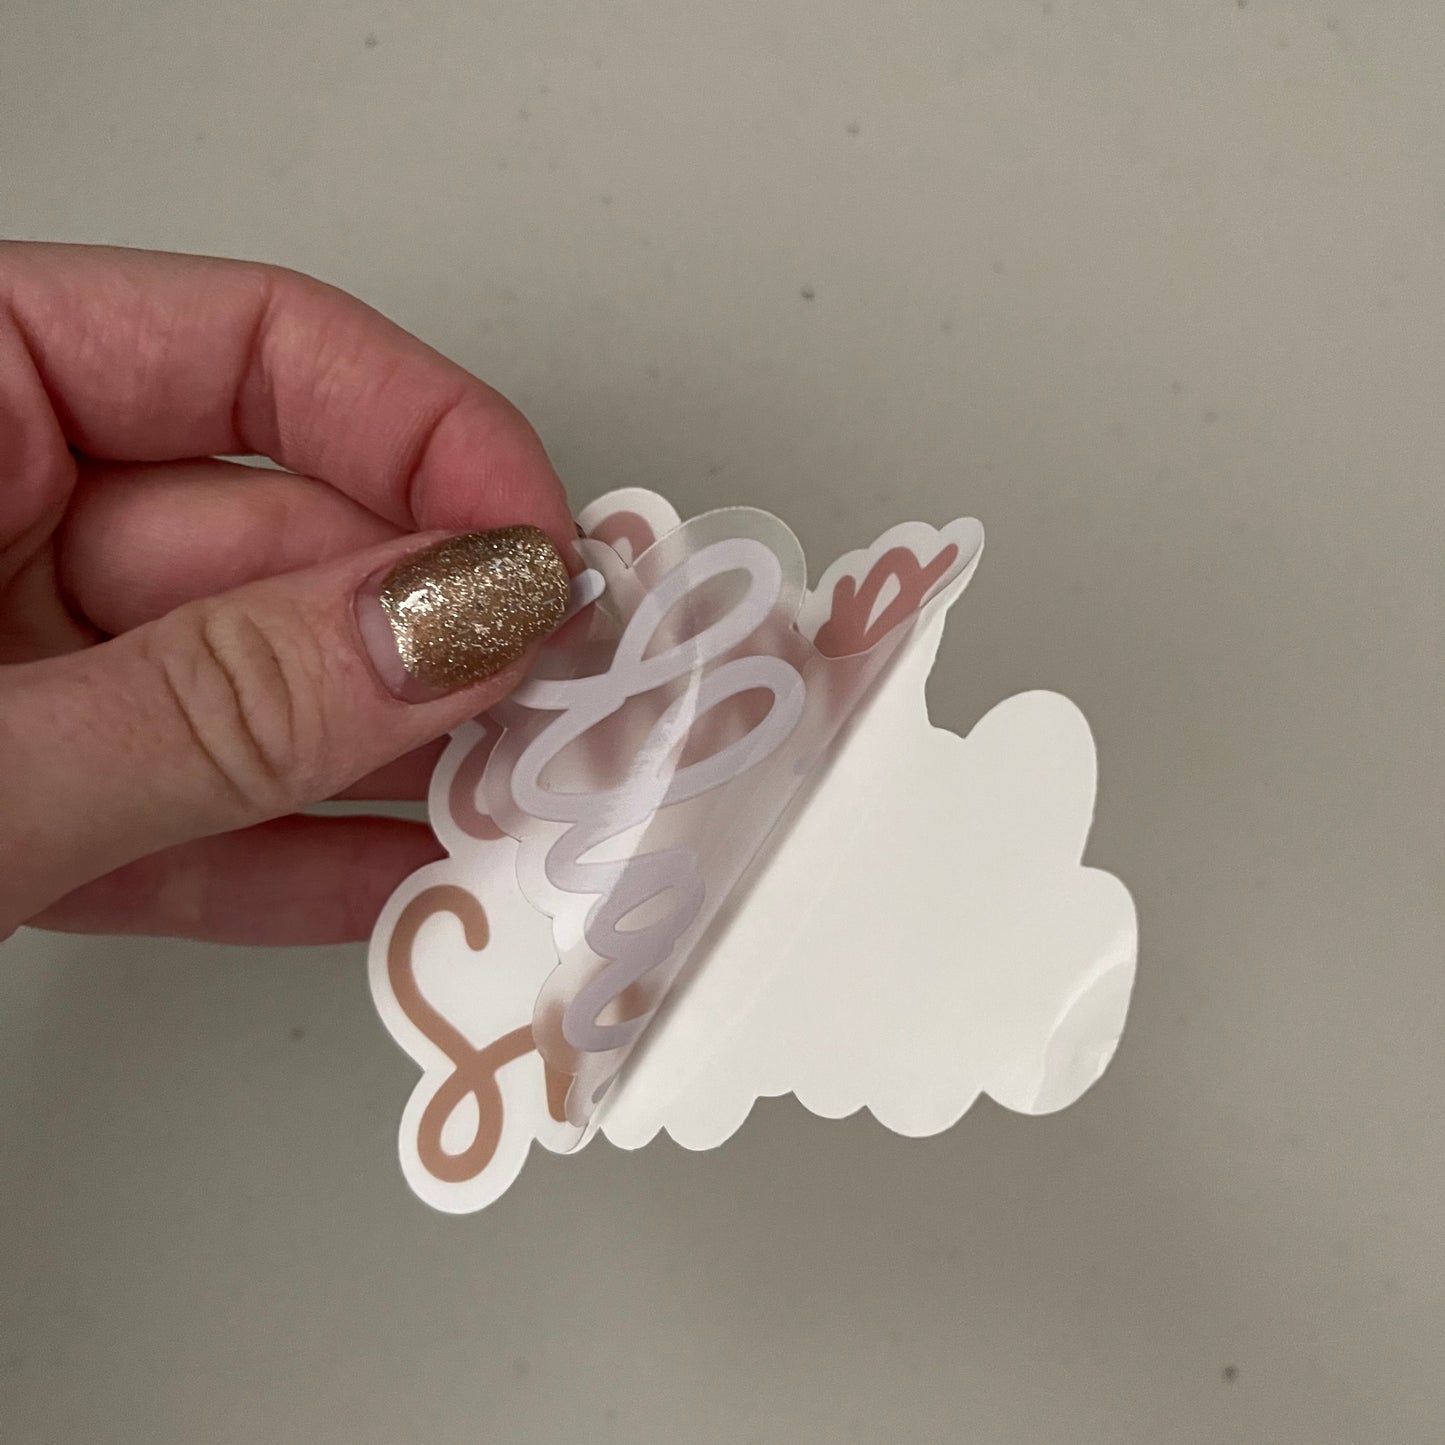 CLEAR Cursive Shop Small Waterproof Vinyl Sticker